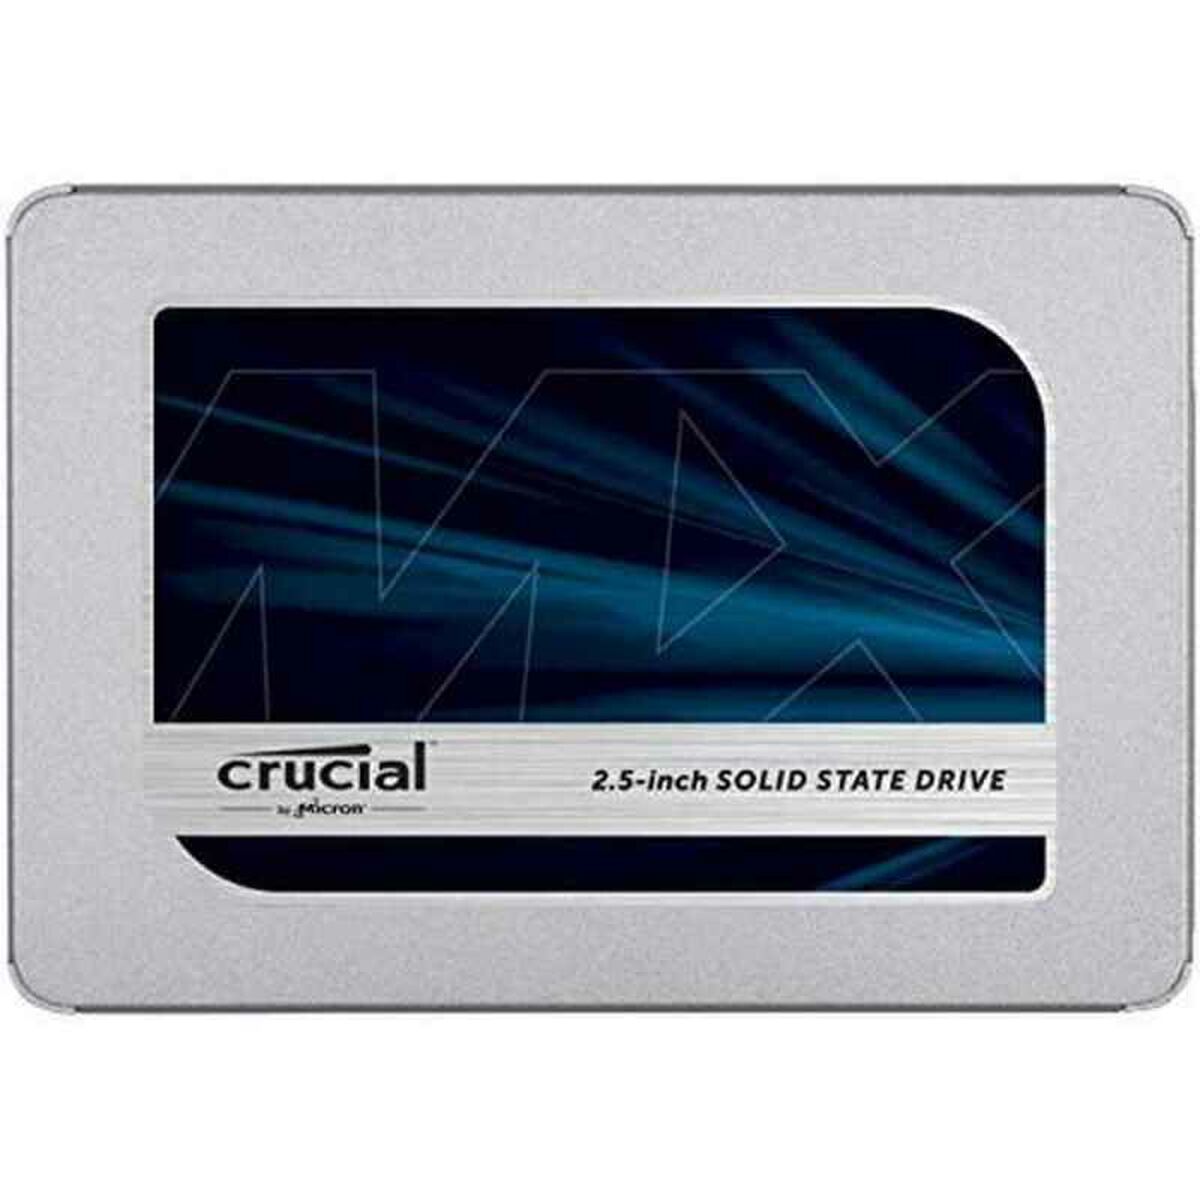 Hard Disk Crucial MX500 SATA III SSD 2.5" 510 MB/s-560 MB/s Capacità:2 TB